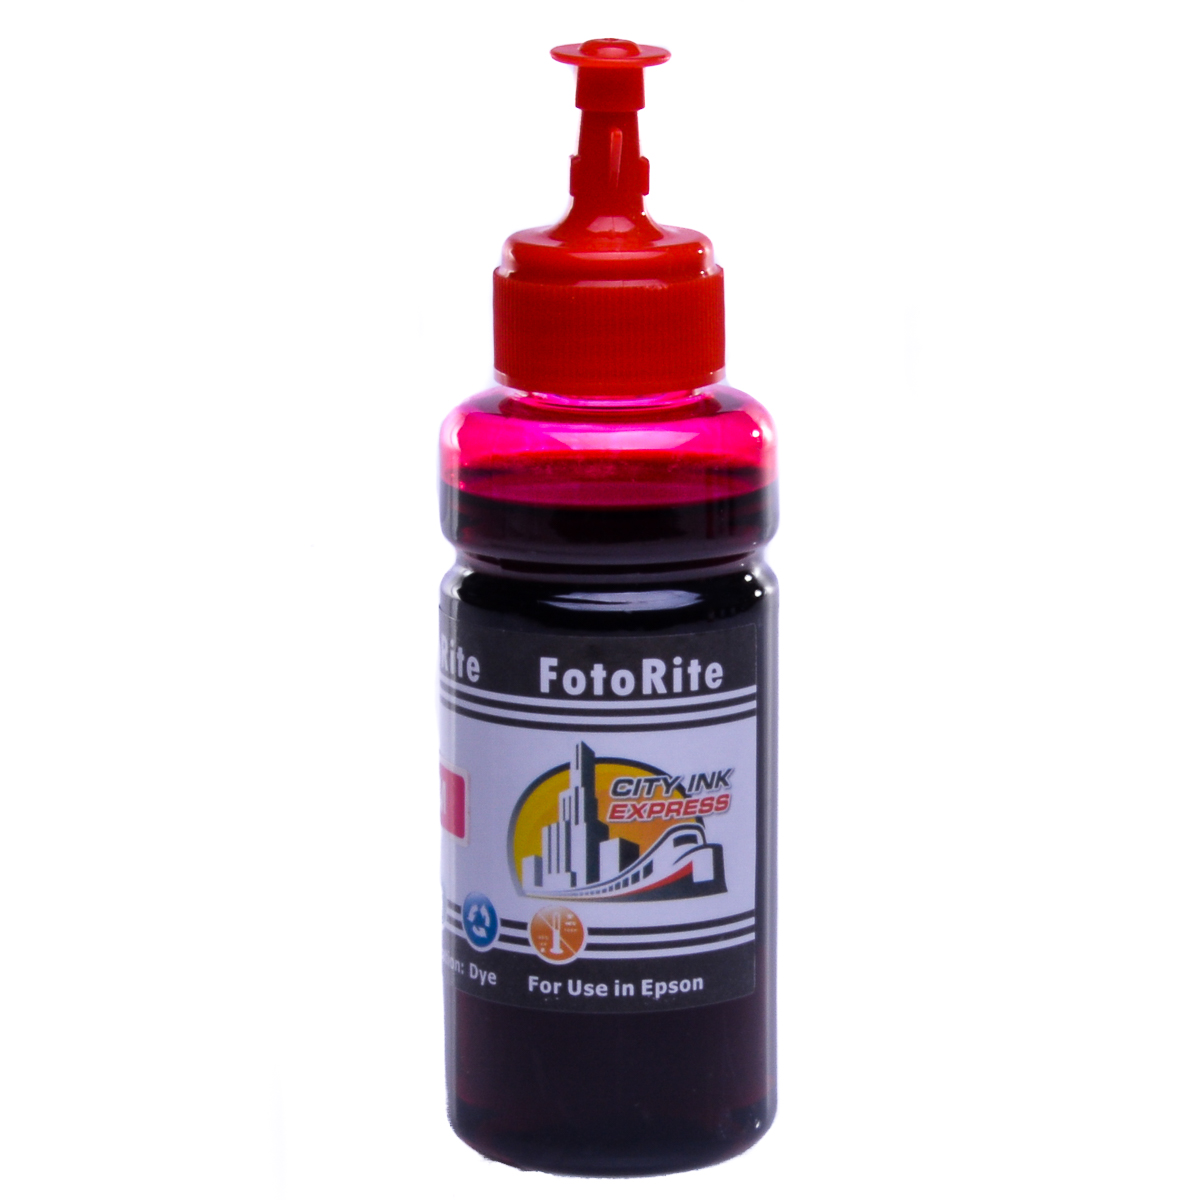 Cheap Magenta dye ink replaces Epson Stylus RX600 - T0483